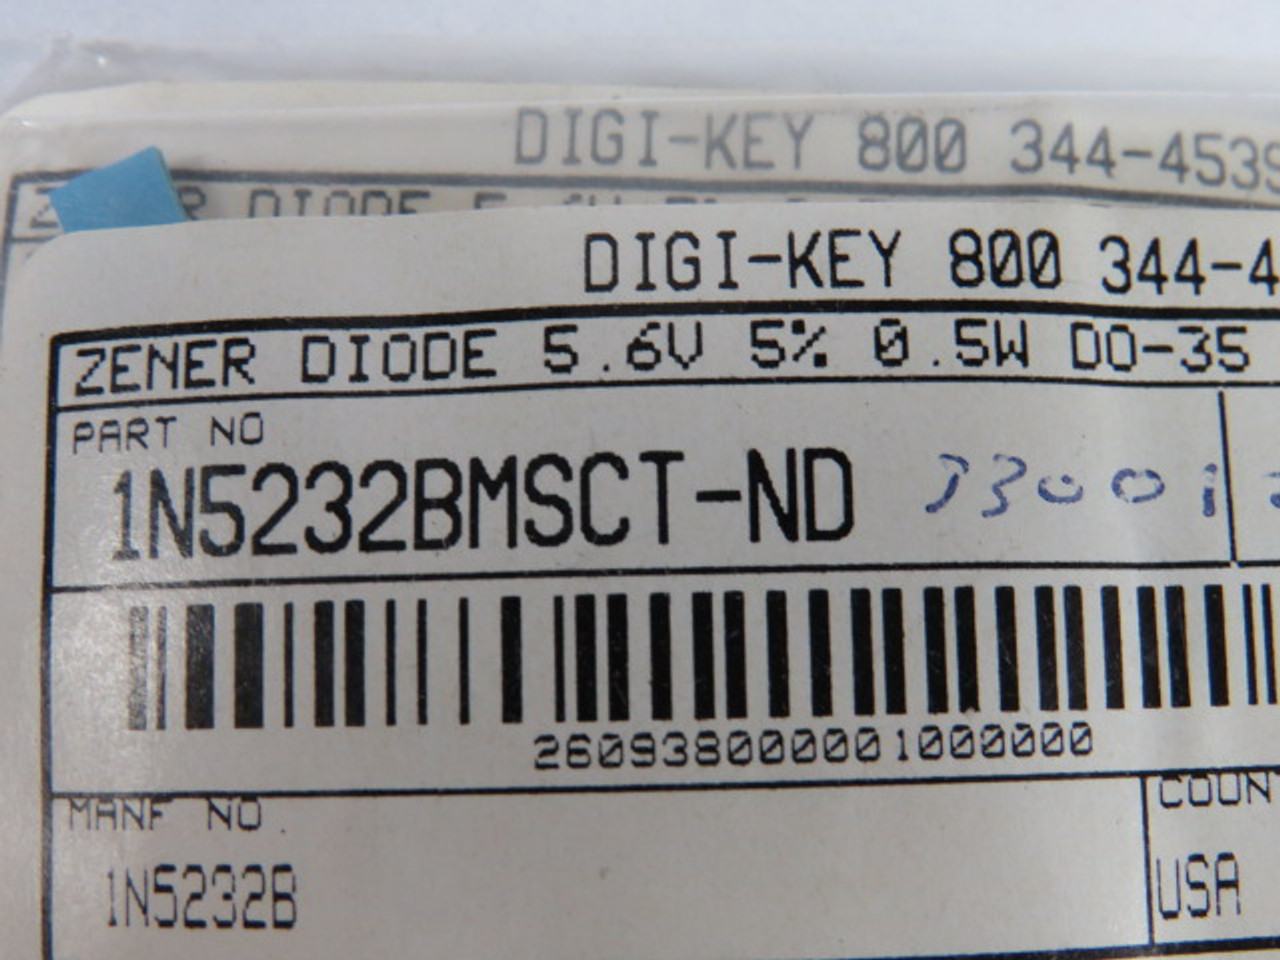 Microsemi Corporation 1N5232B Zener Diode 5.6V 5% 0.5W DO-35 Lot of 2 ! NOP !